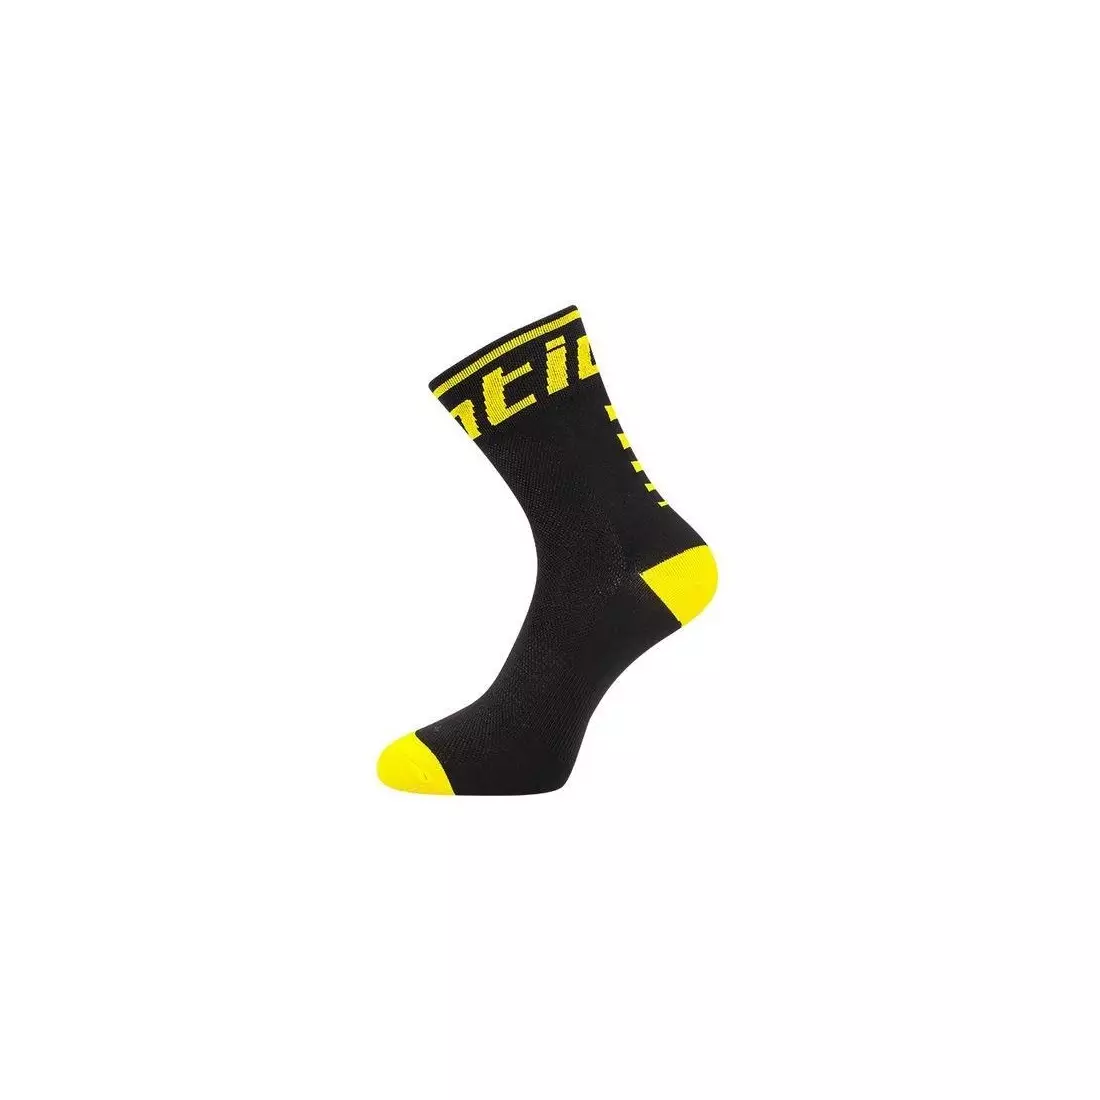 SANTIC cycling socks black and yellow 6C09054Y